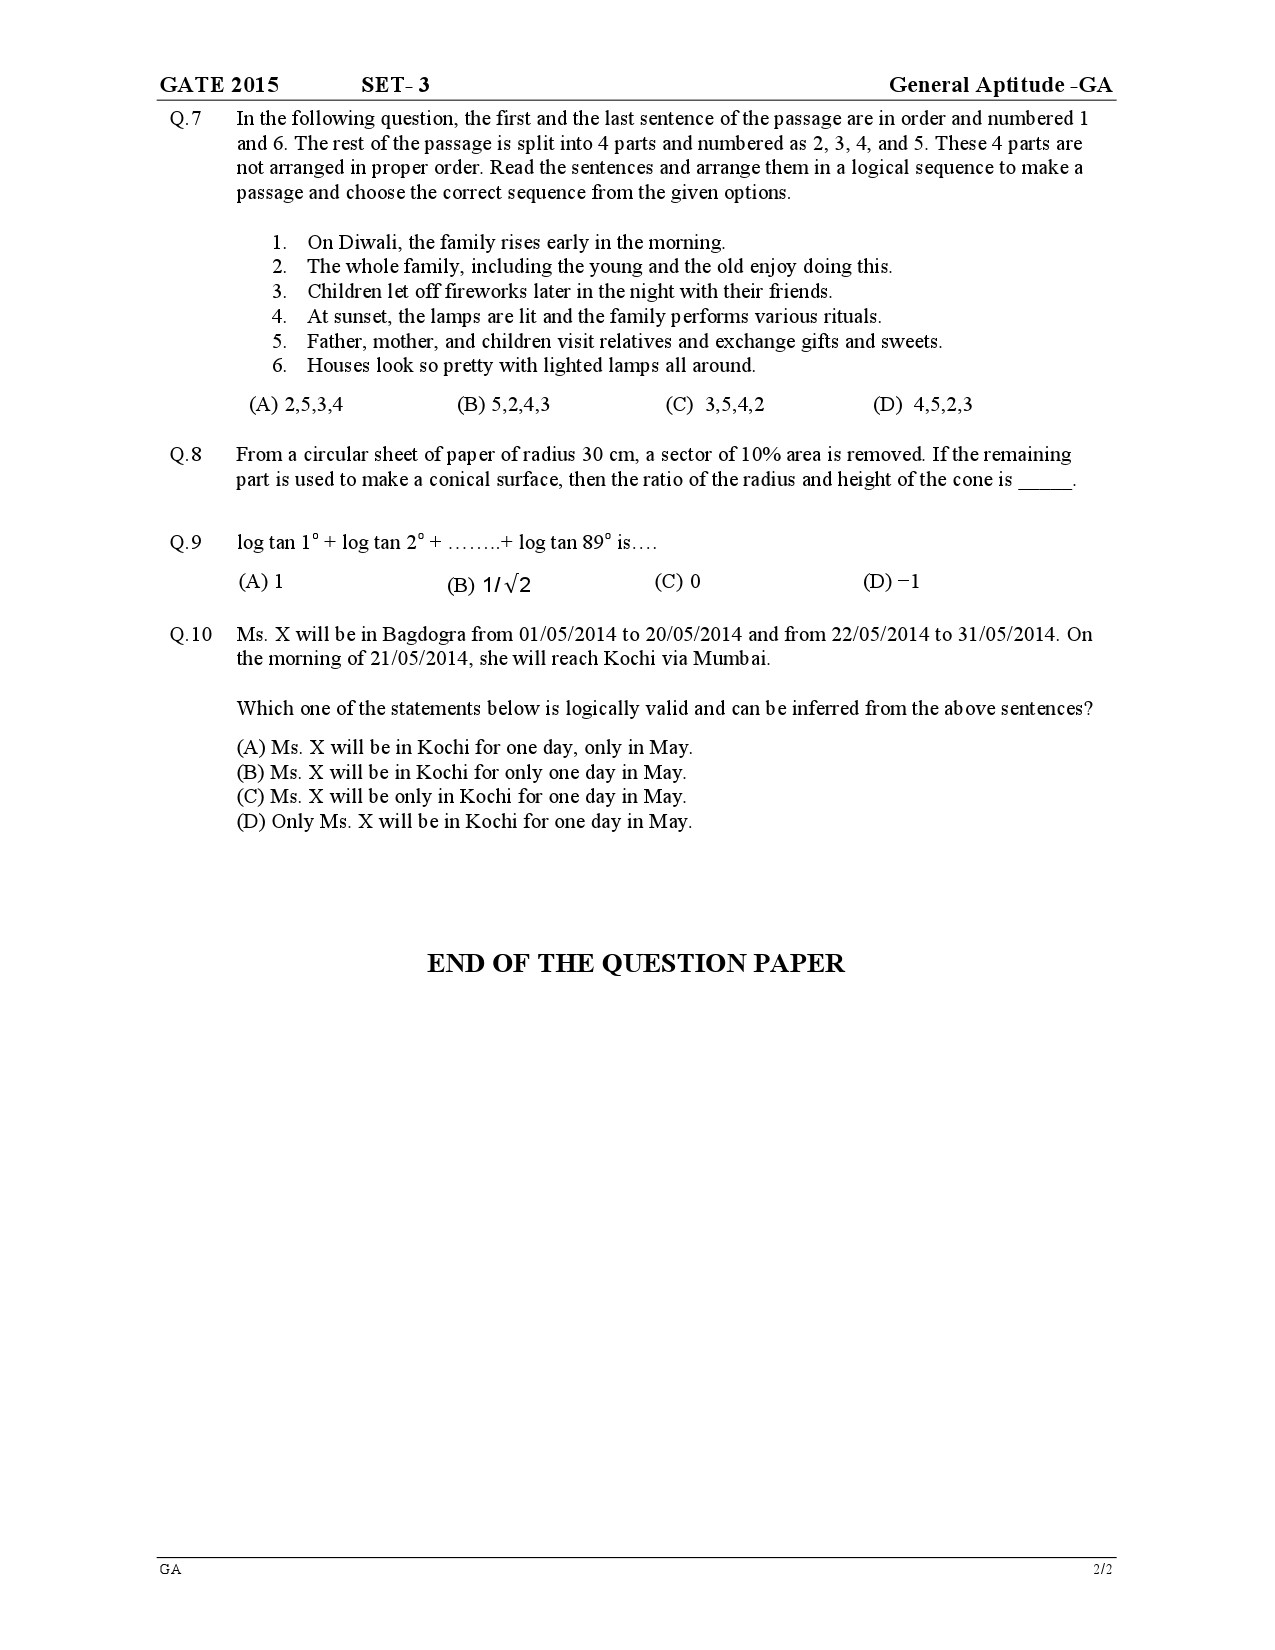 GATE Exam Question Paper 2015 General Aptitude 6